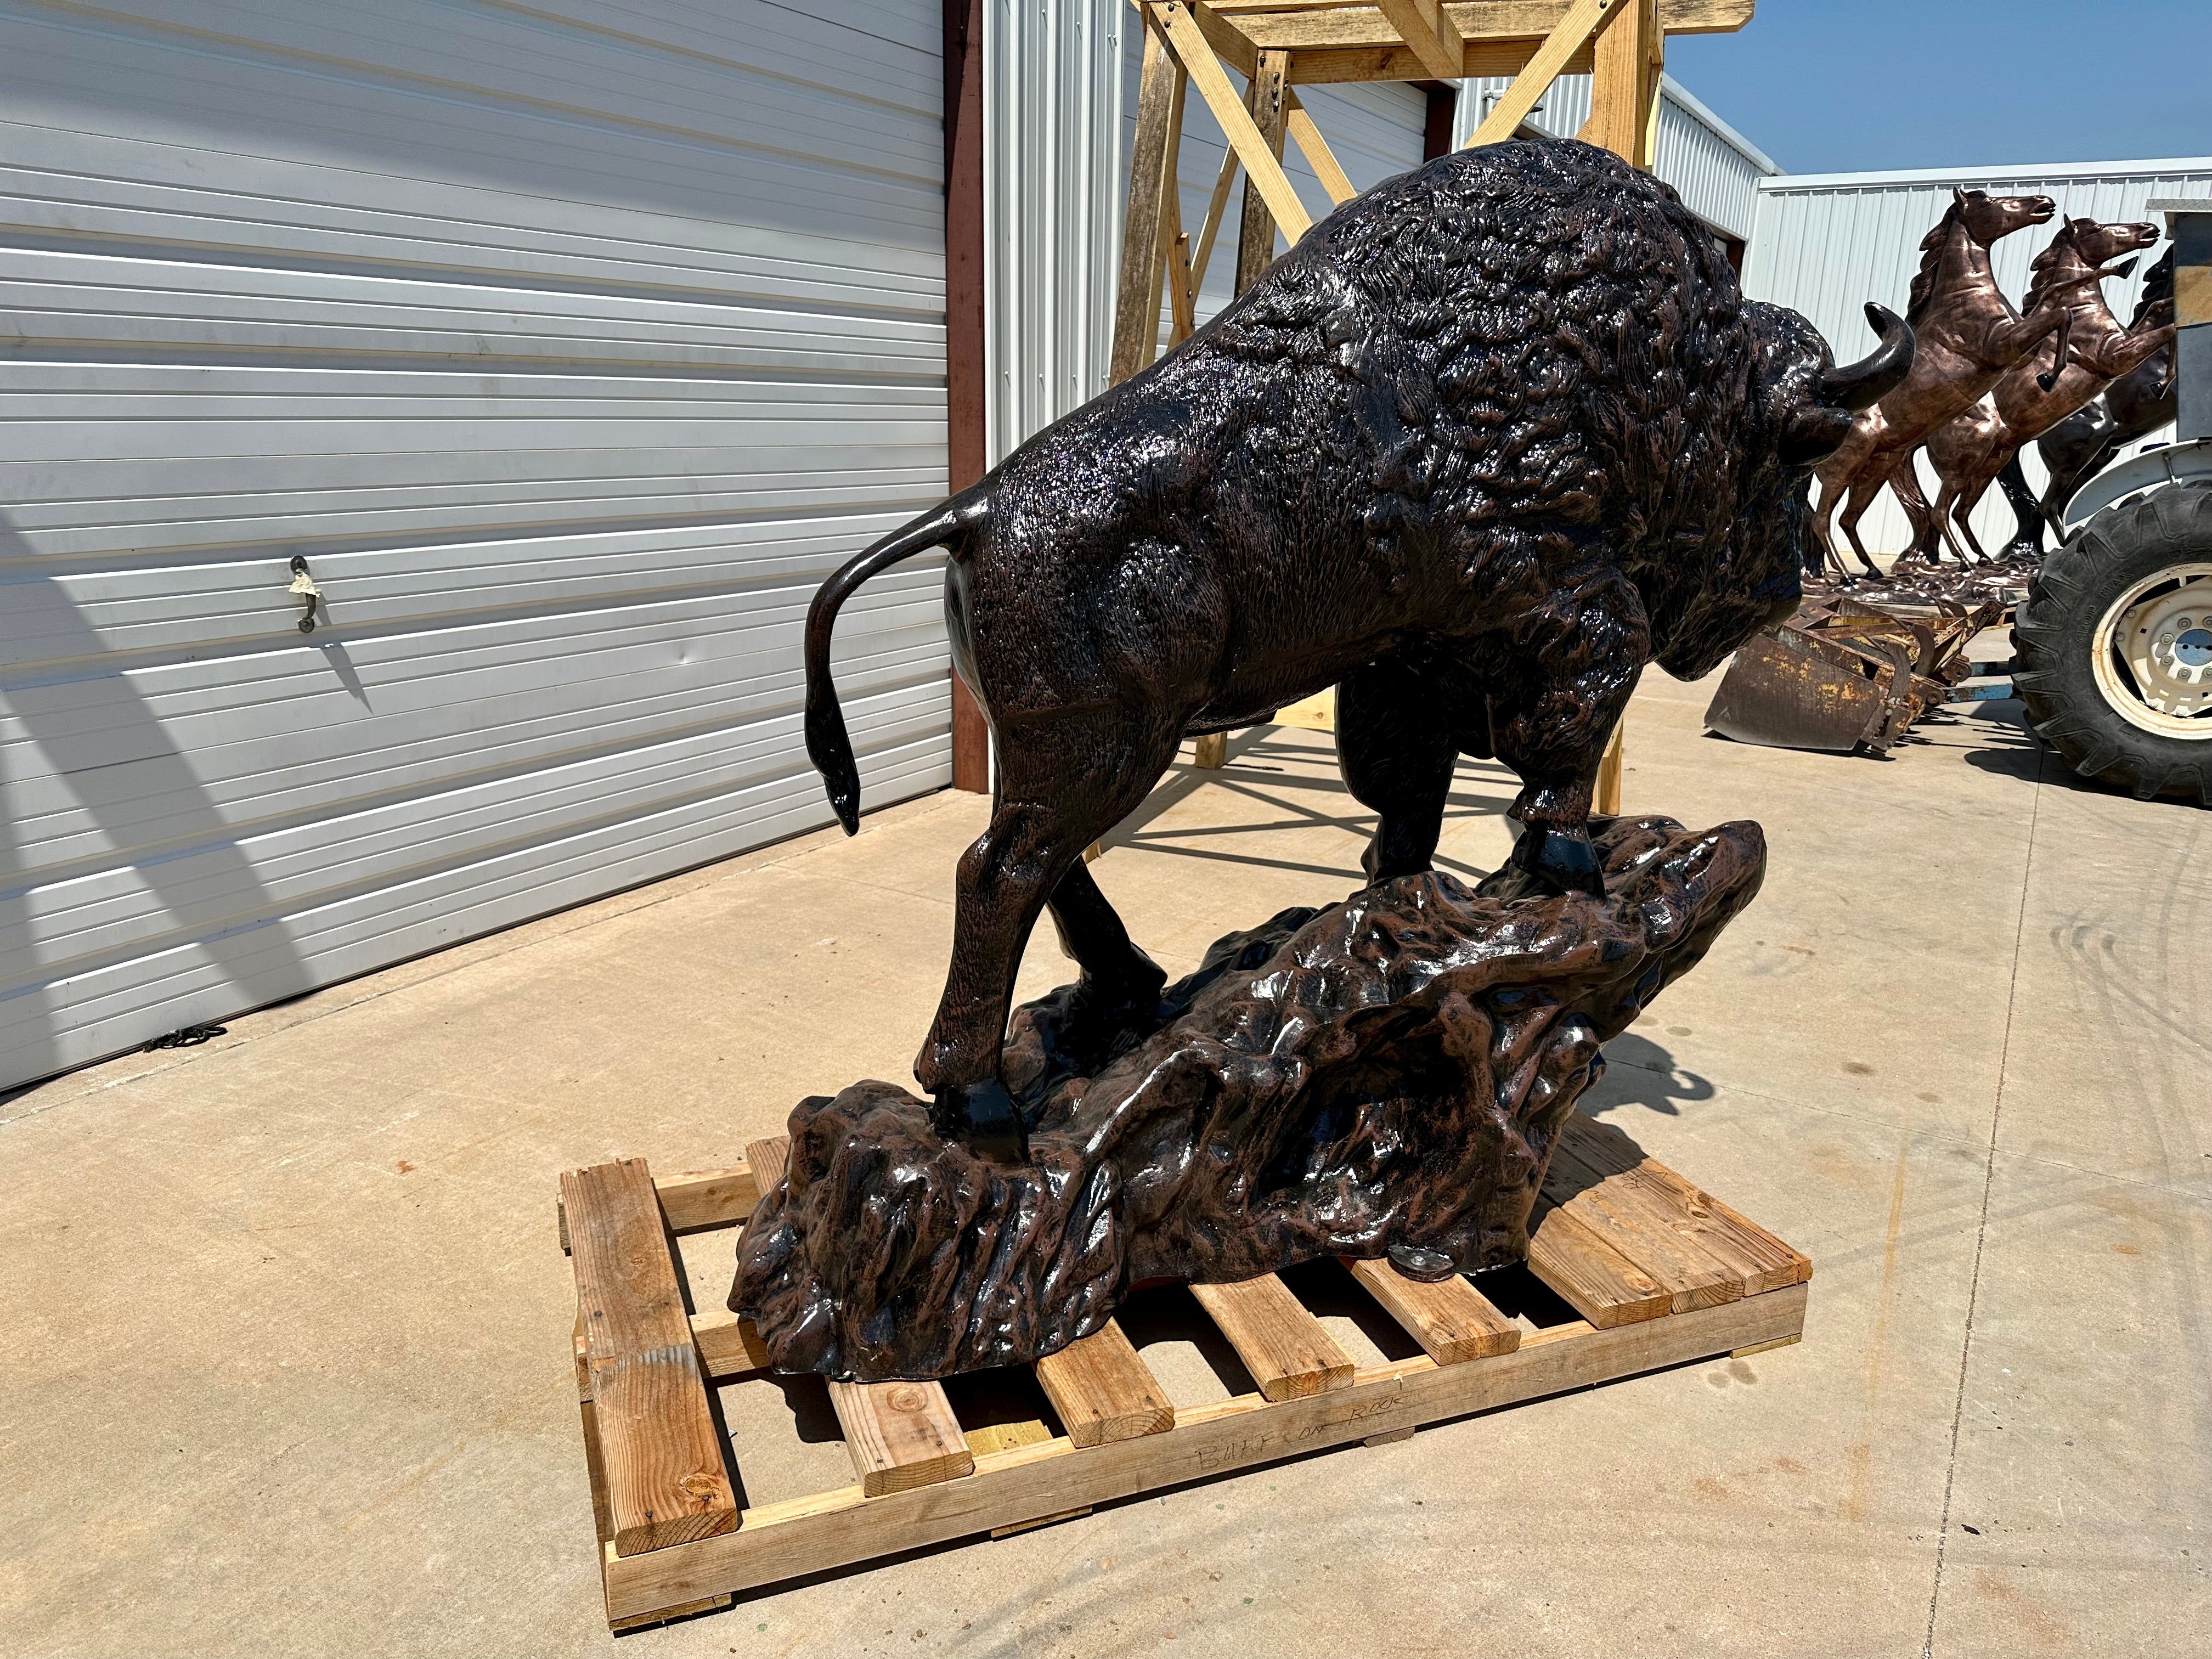 Sold *Medium Buffalo on Rock Statue